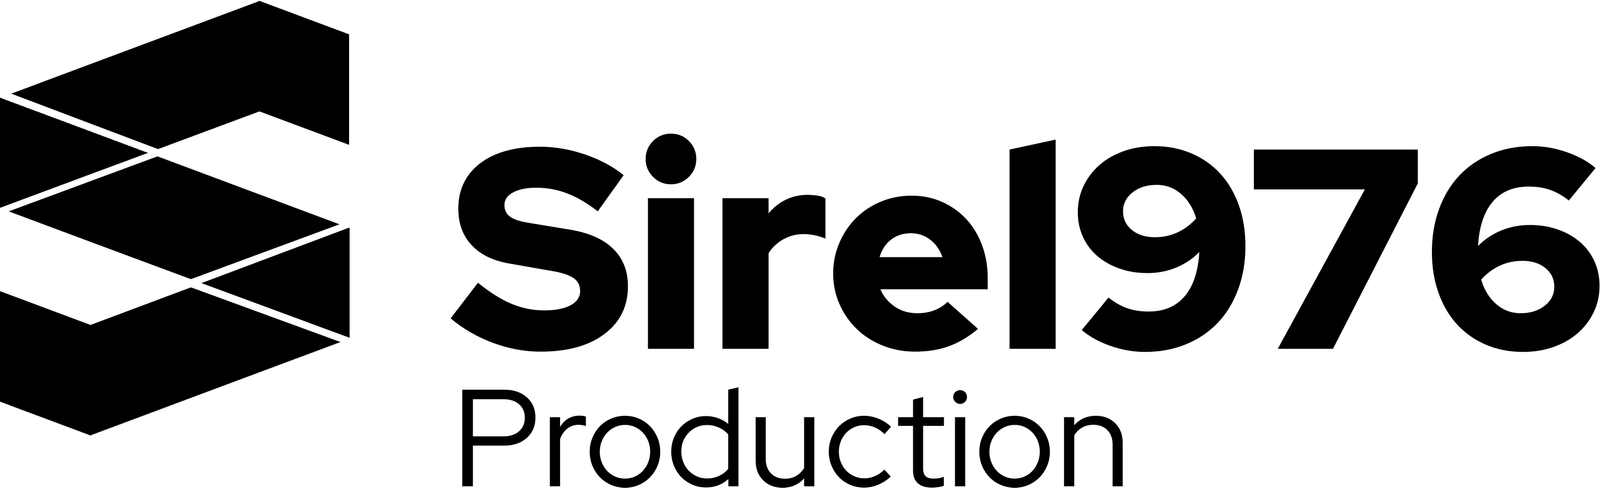 Logo Sirel976 Production v2 - black